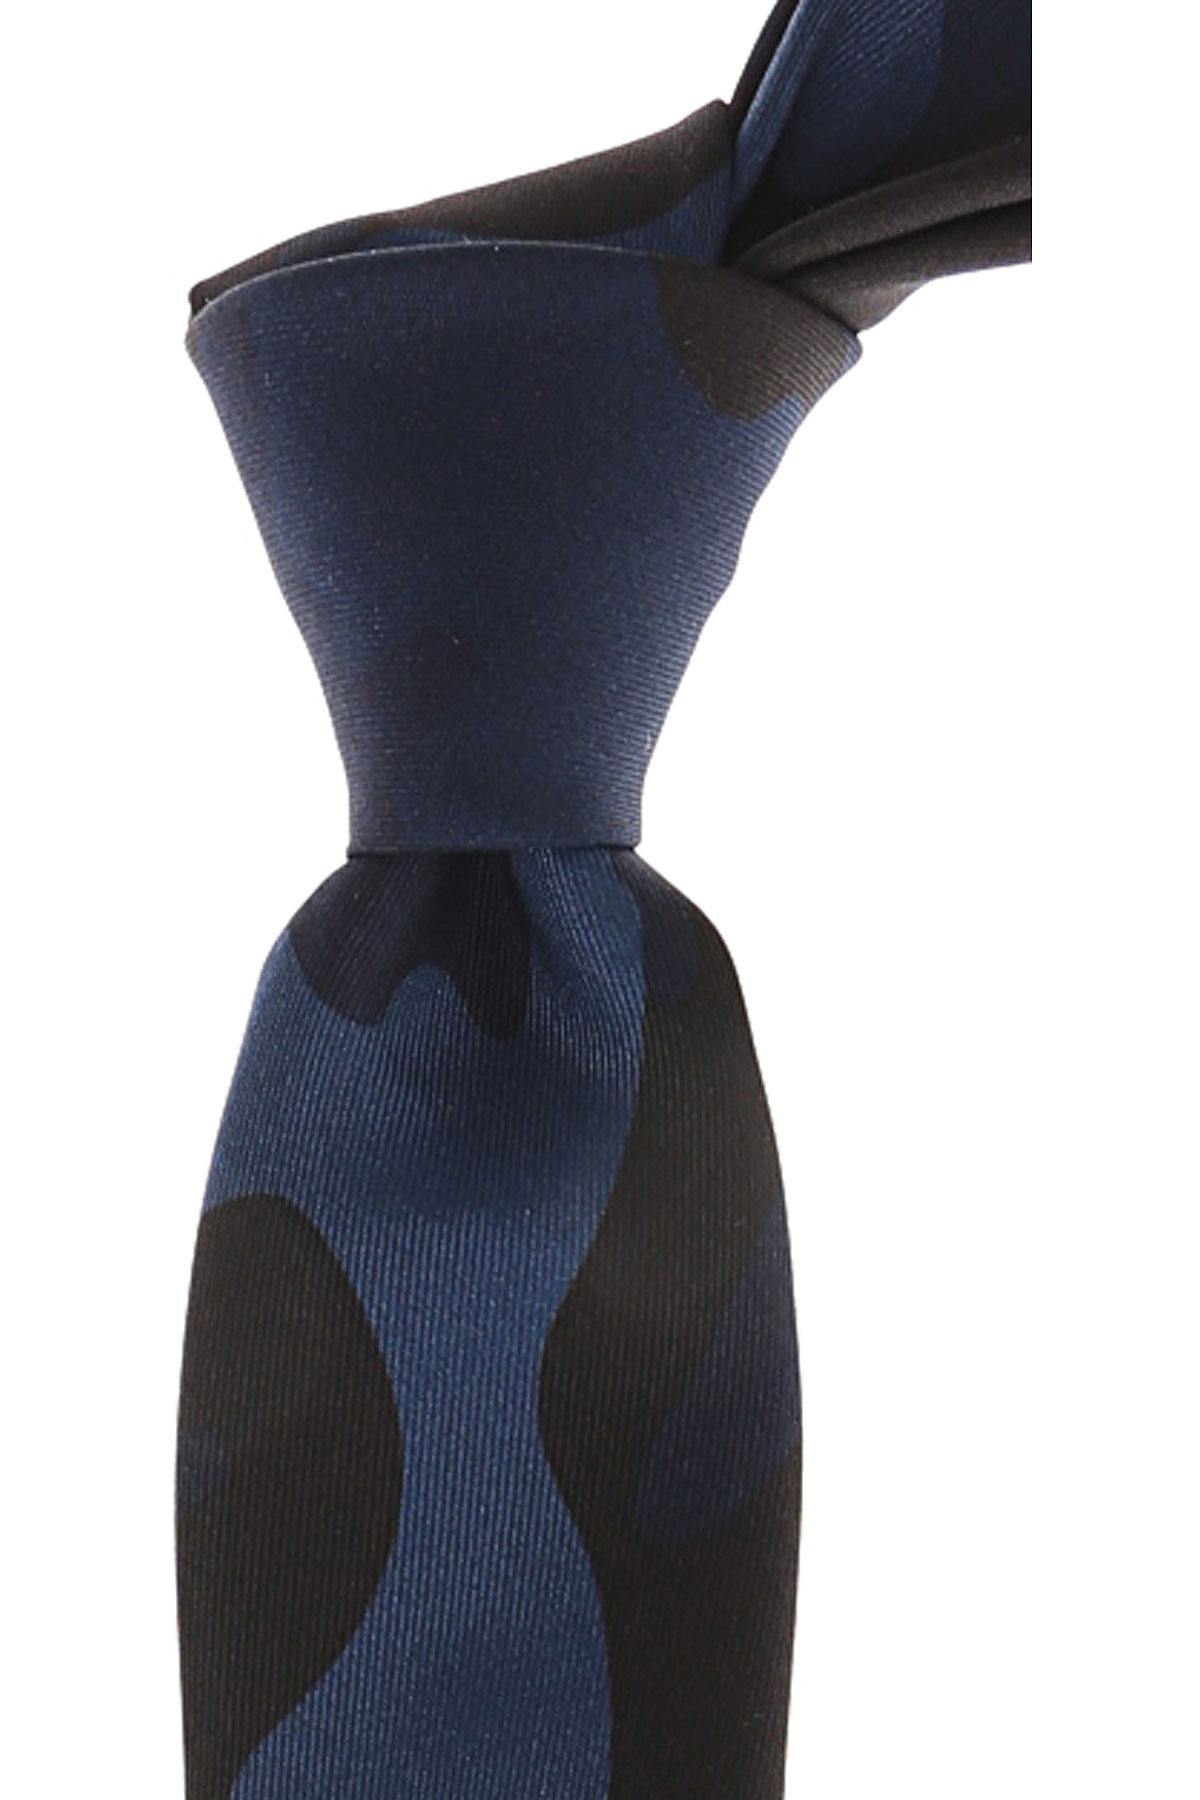 Cravates Valentino , Bleu camouflage, Soie, 2017